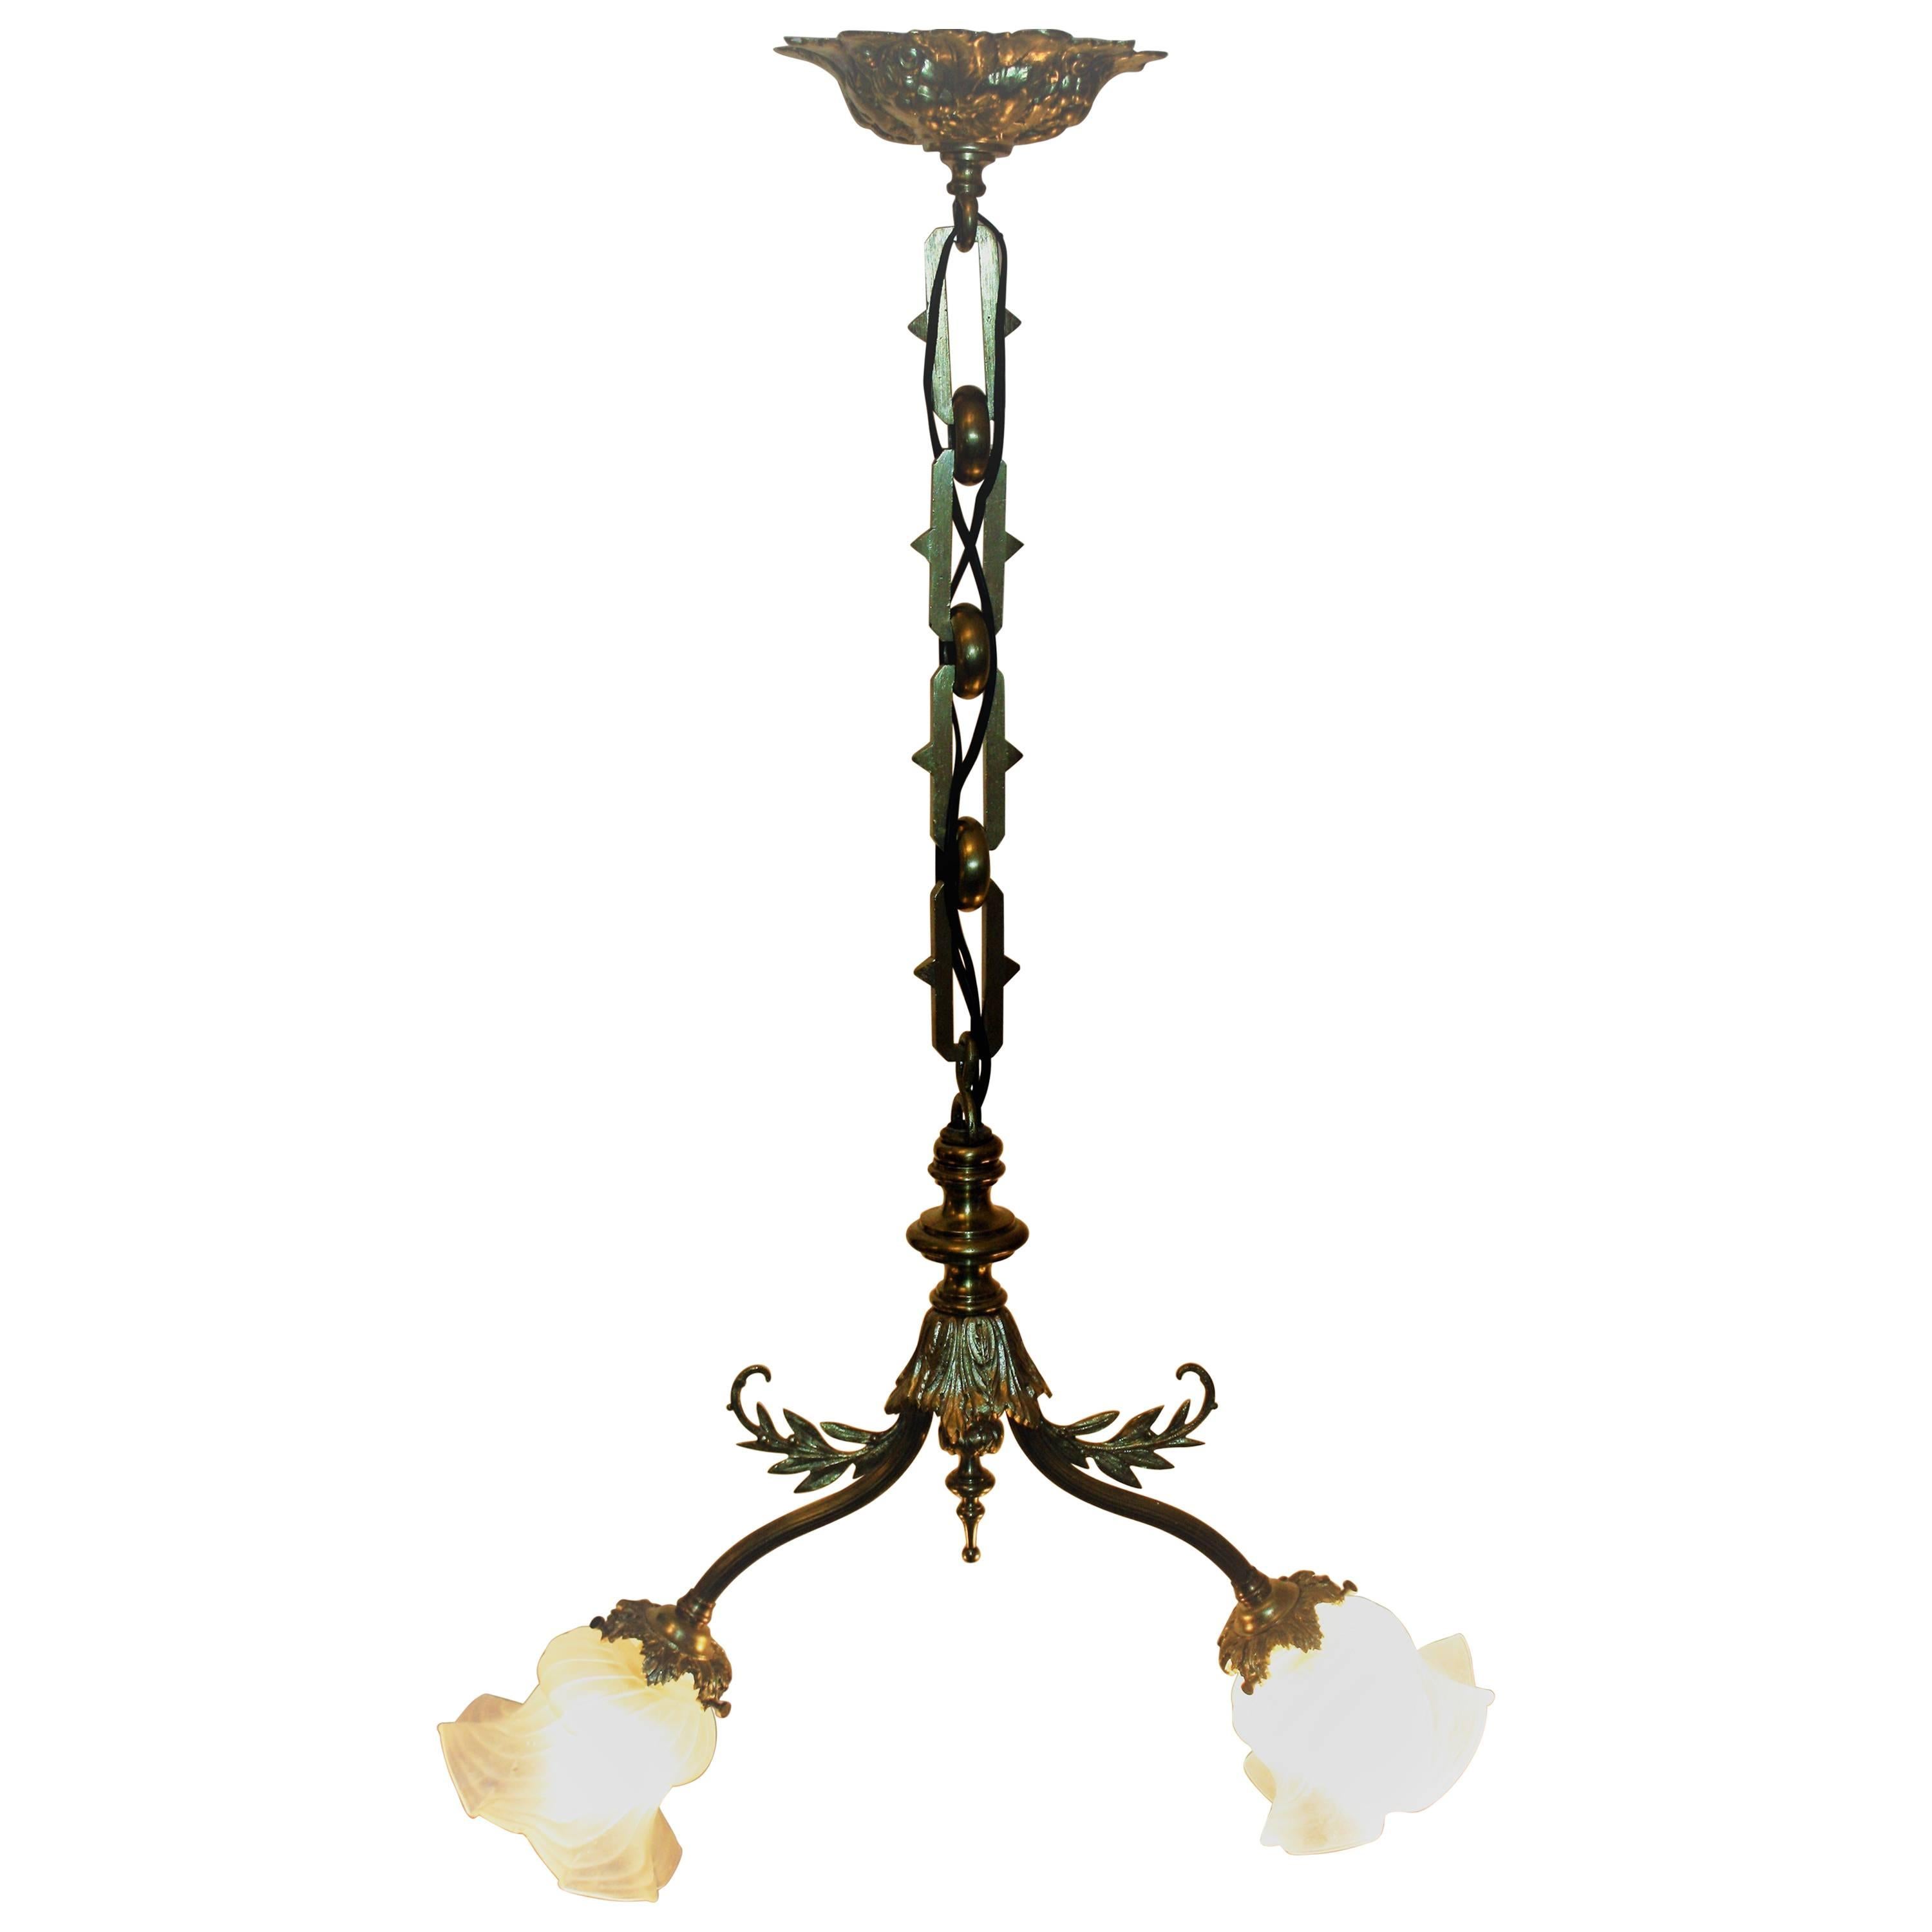 Beautiful Art Nouveau Two-Light Brass and Glass Pendant, circa 1900s